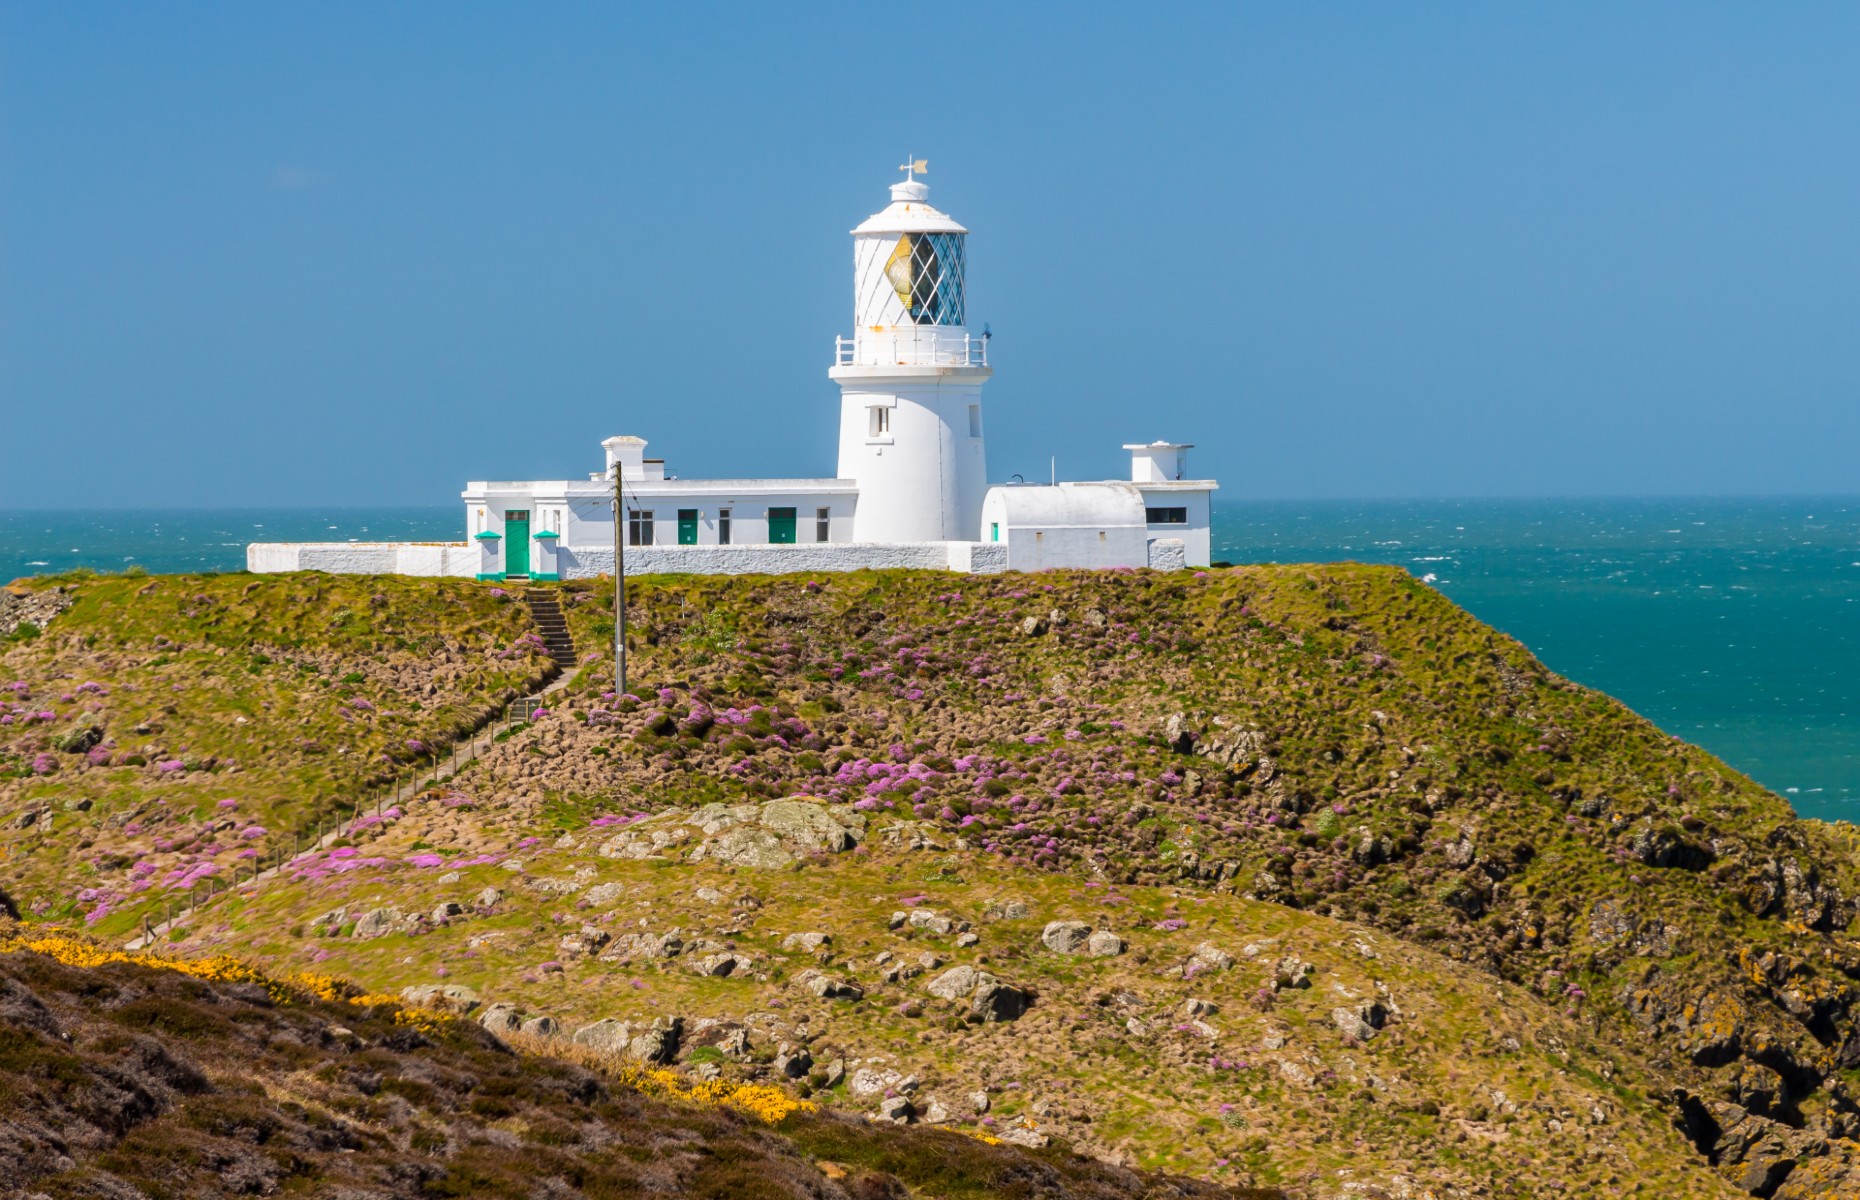 Strumble Head Lighthouse (Image: ian woolcock/Shutterstock)